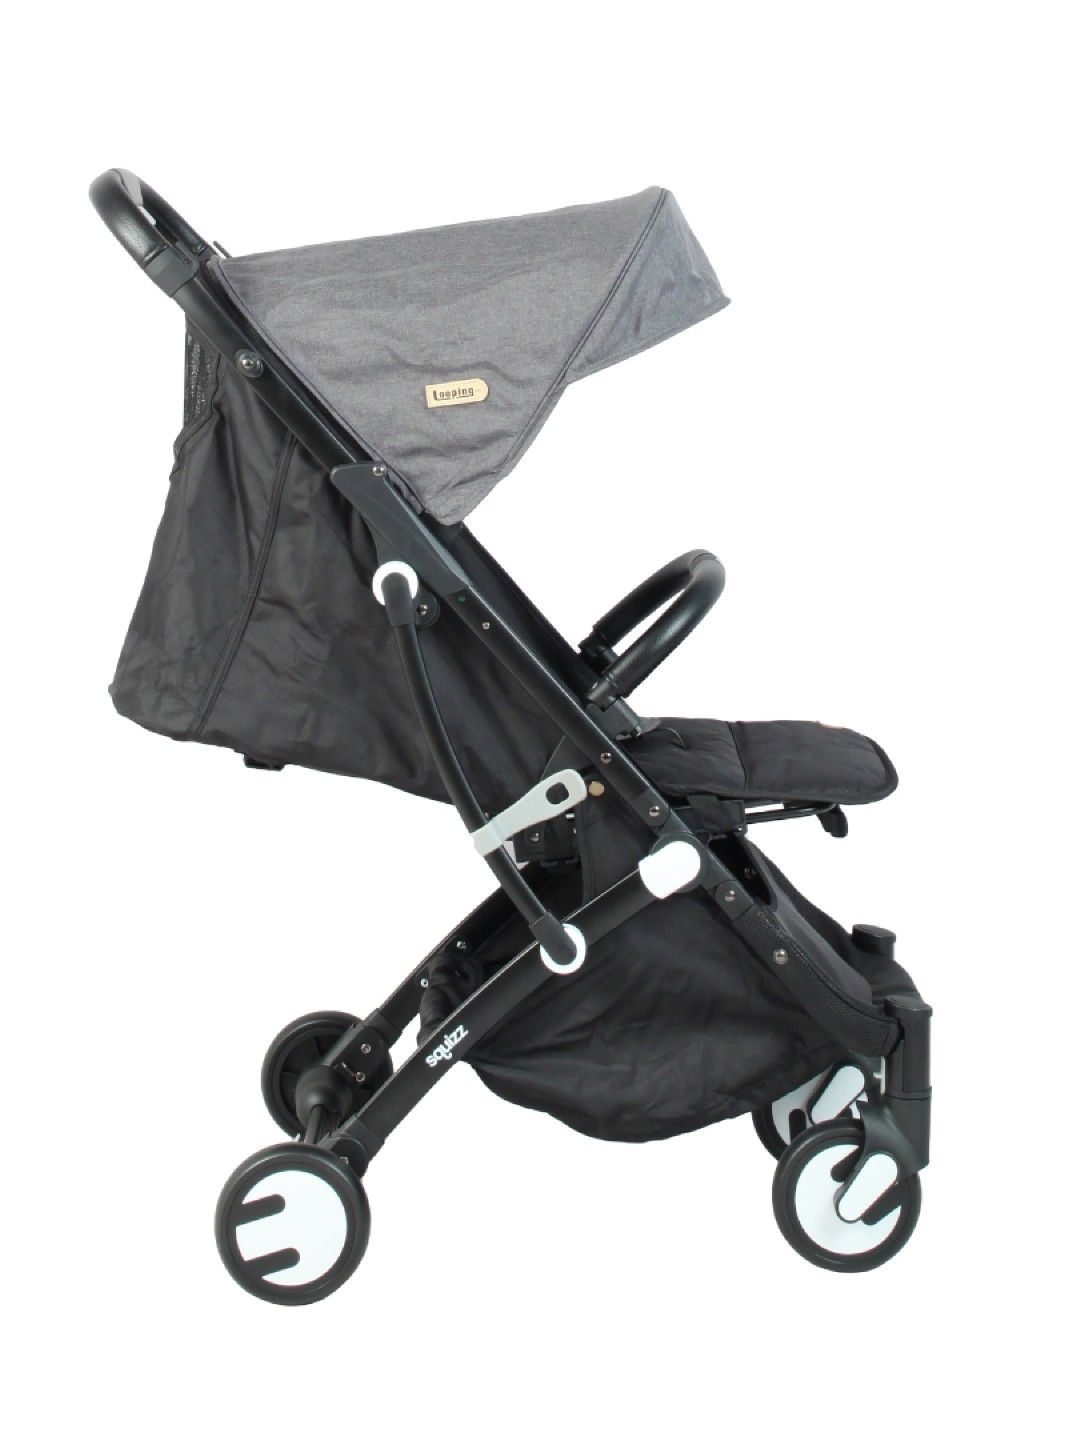 Looping Squizz 3 Stroller (Grey & Black- Image 1)